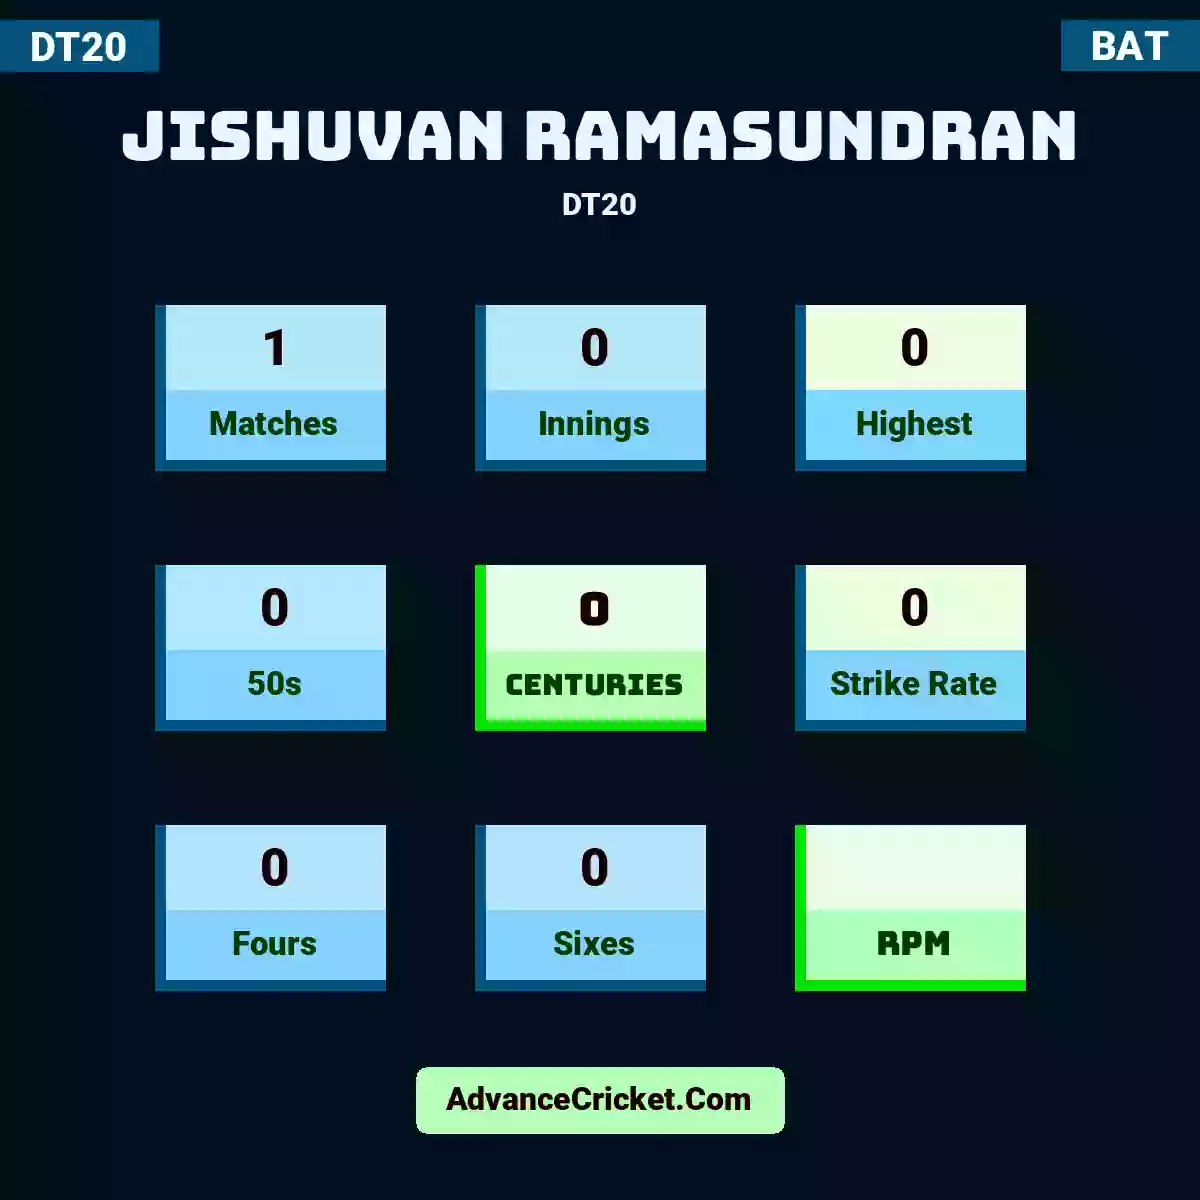 Jishuvan Ramasundran DT20 , Jishuvan Ramasundran played 1 matches, scored 0 runs as highest, 0 half-centuries, and 0 centuries, with a strike rate of 0. J.Ramasundran hit 0 fours and 0 sixes.